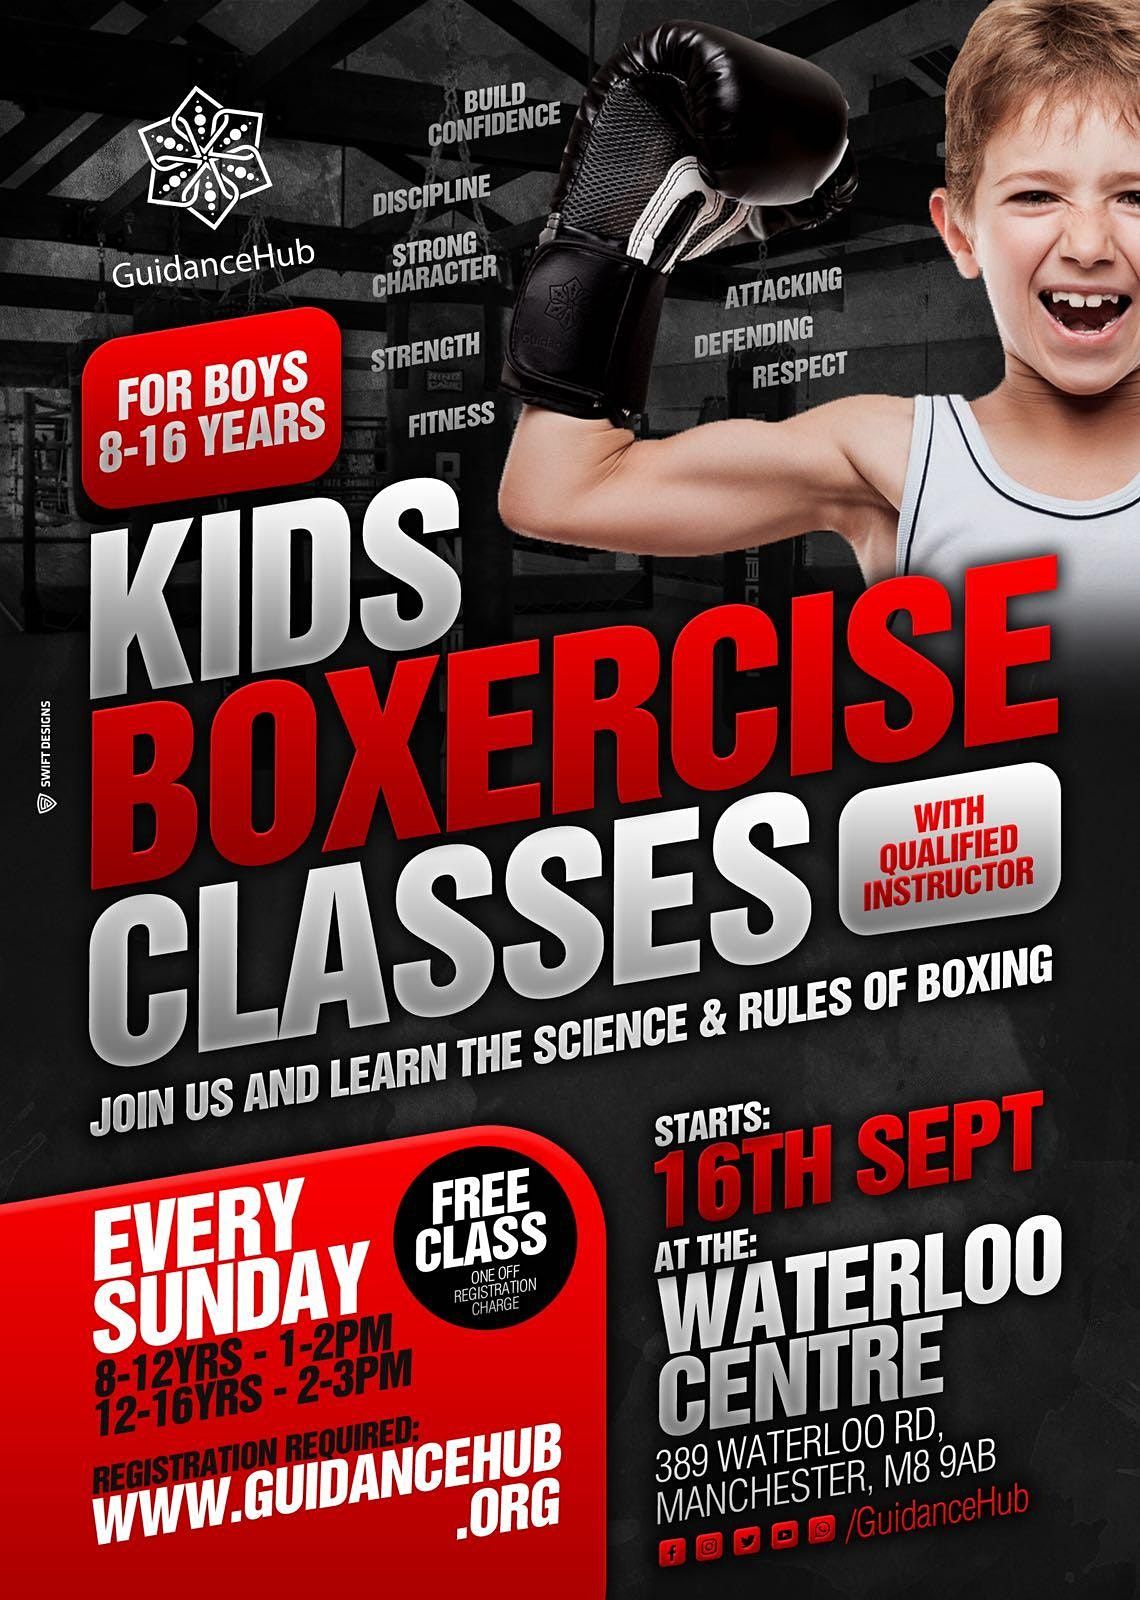 Boys Boxercise Classes - Every Sun|10:30am